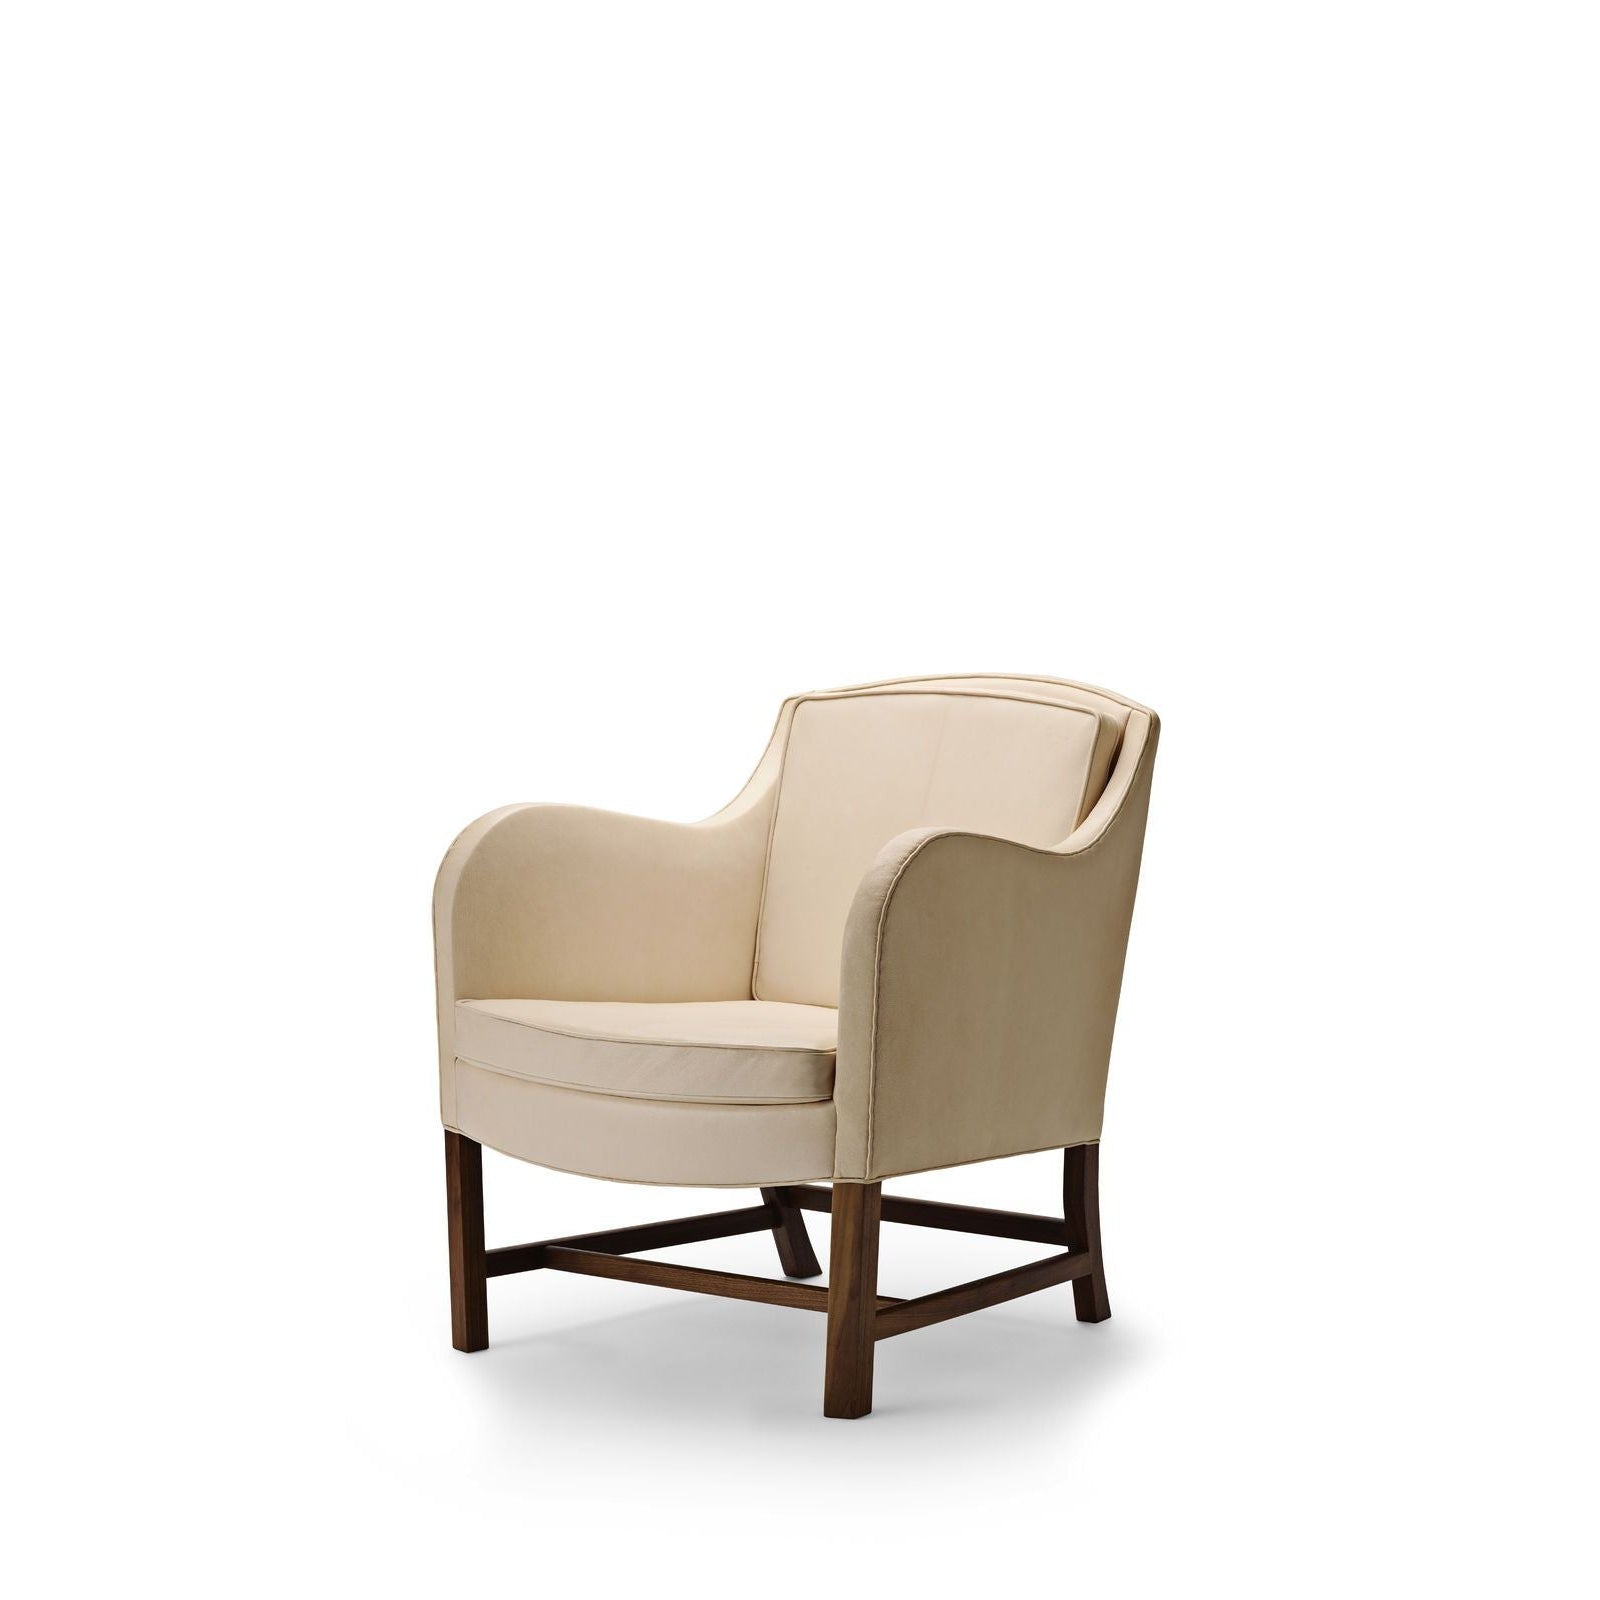 Carl Hansen Kk43960 Mix Chair Oiled Walnut/Goat Nature Leather